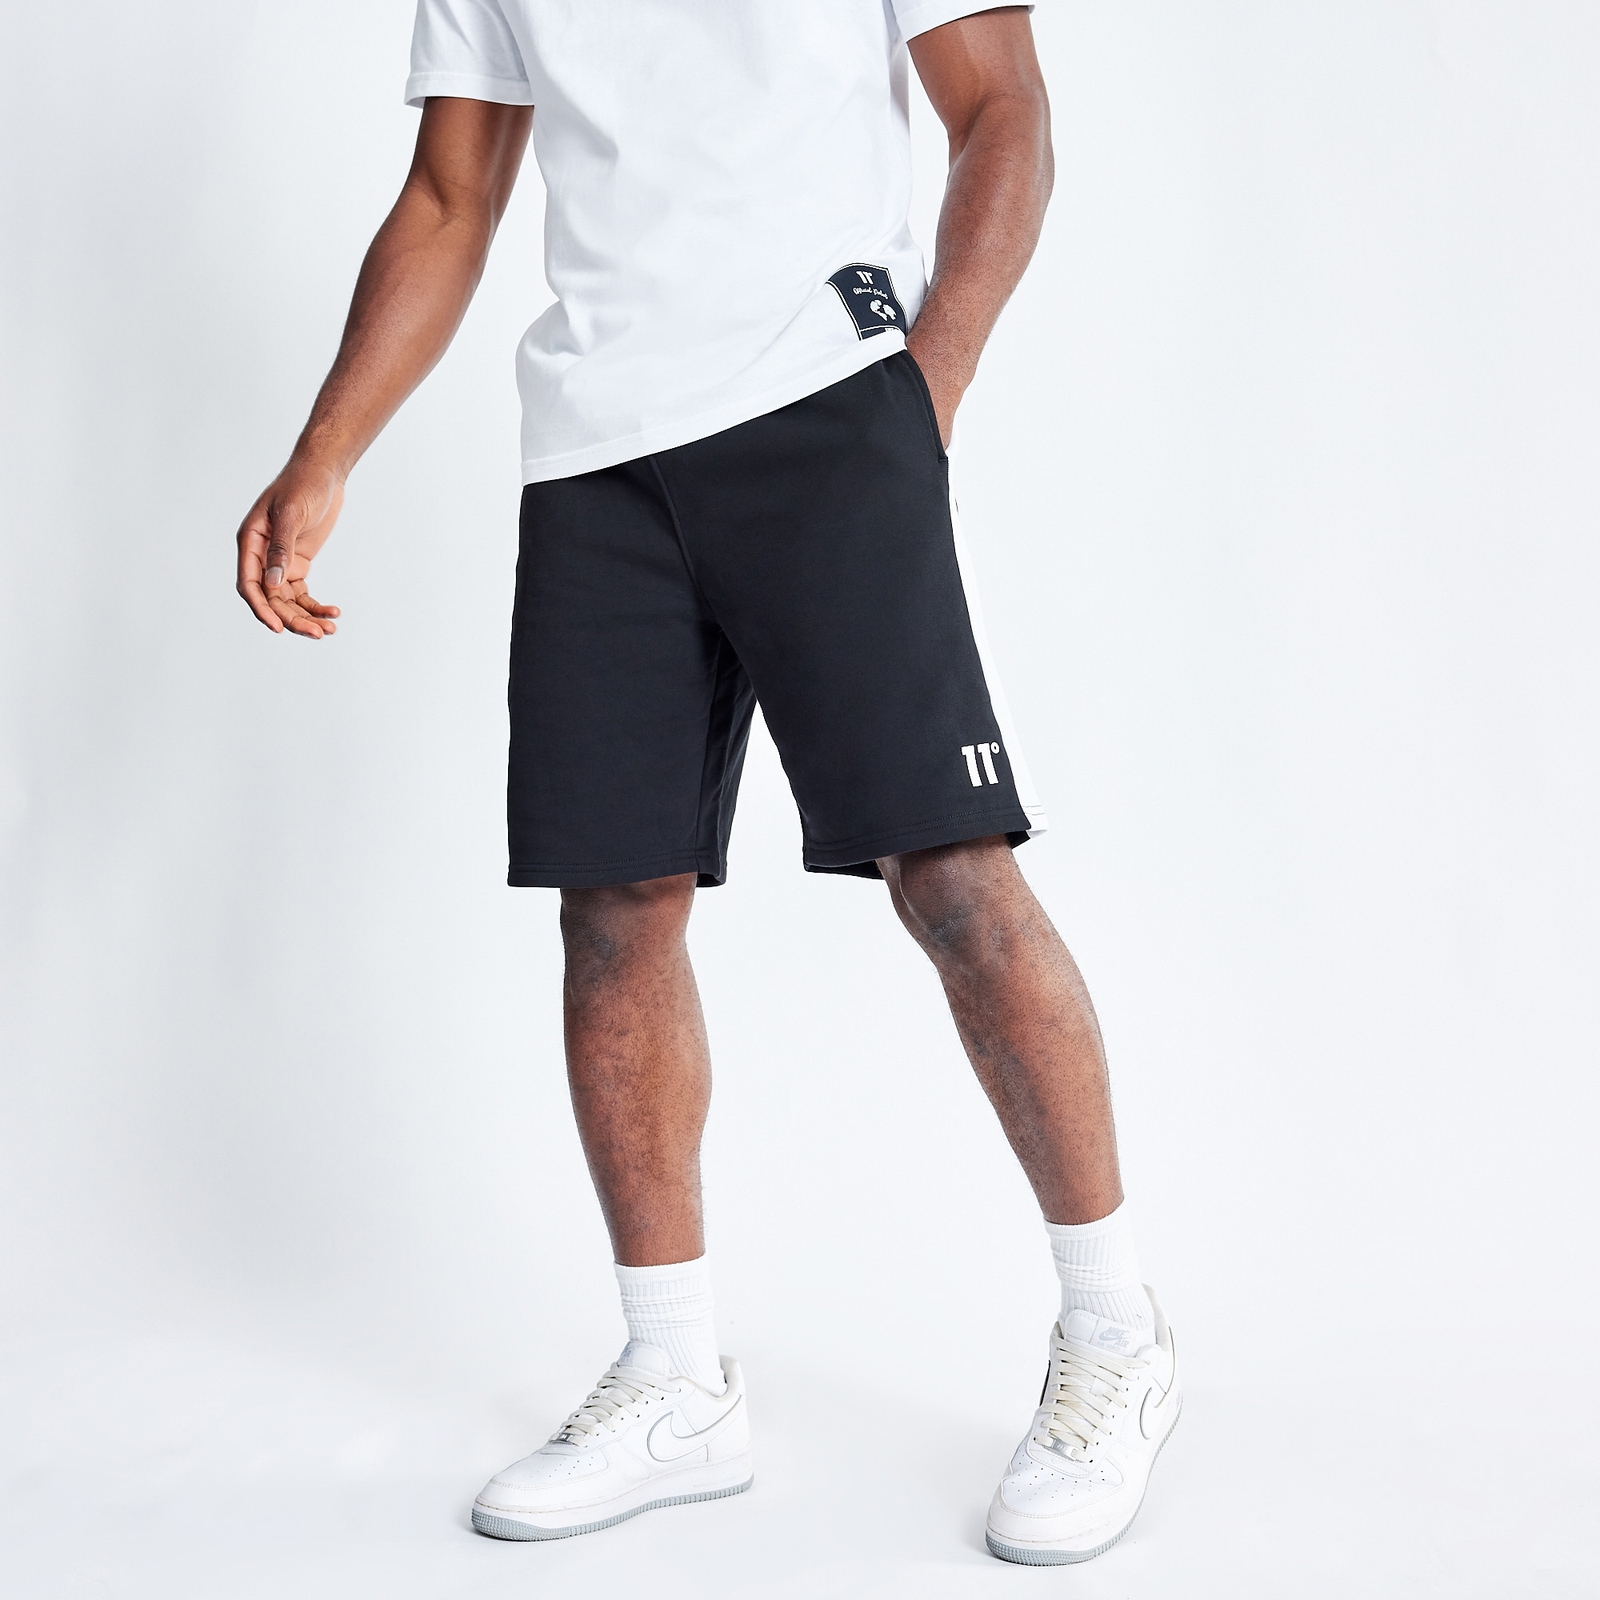 panel sweat shorts - black / white - xs